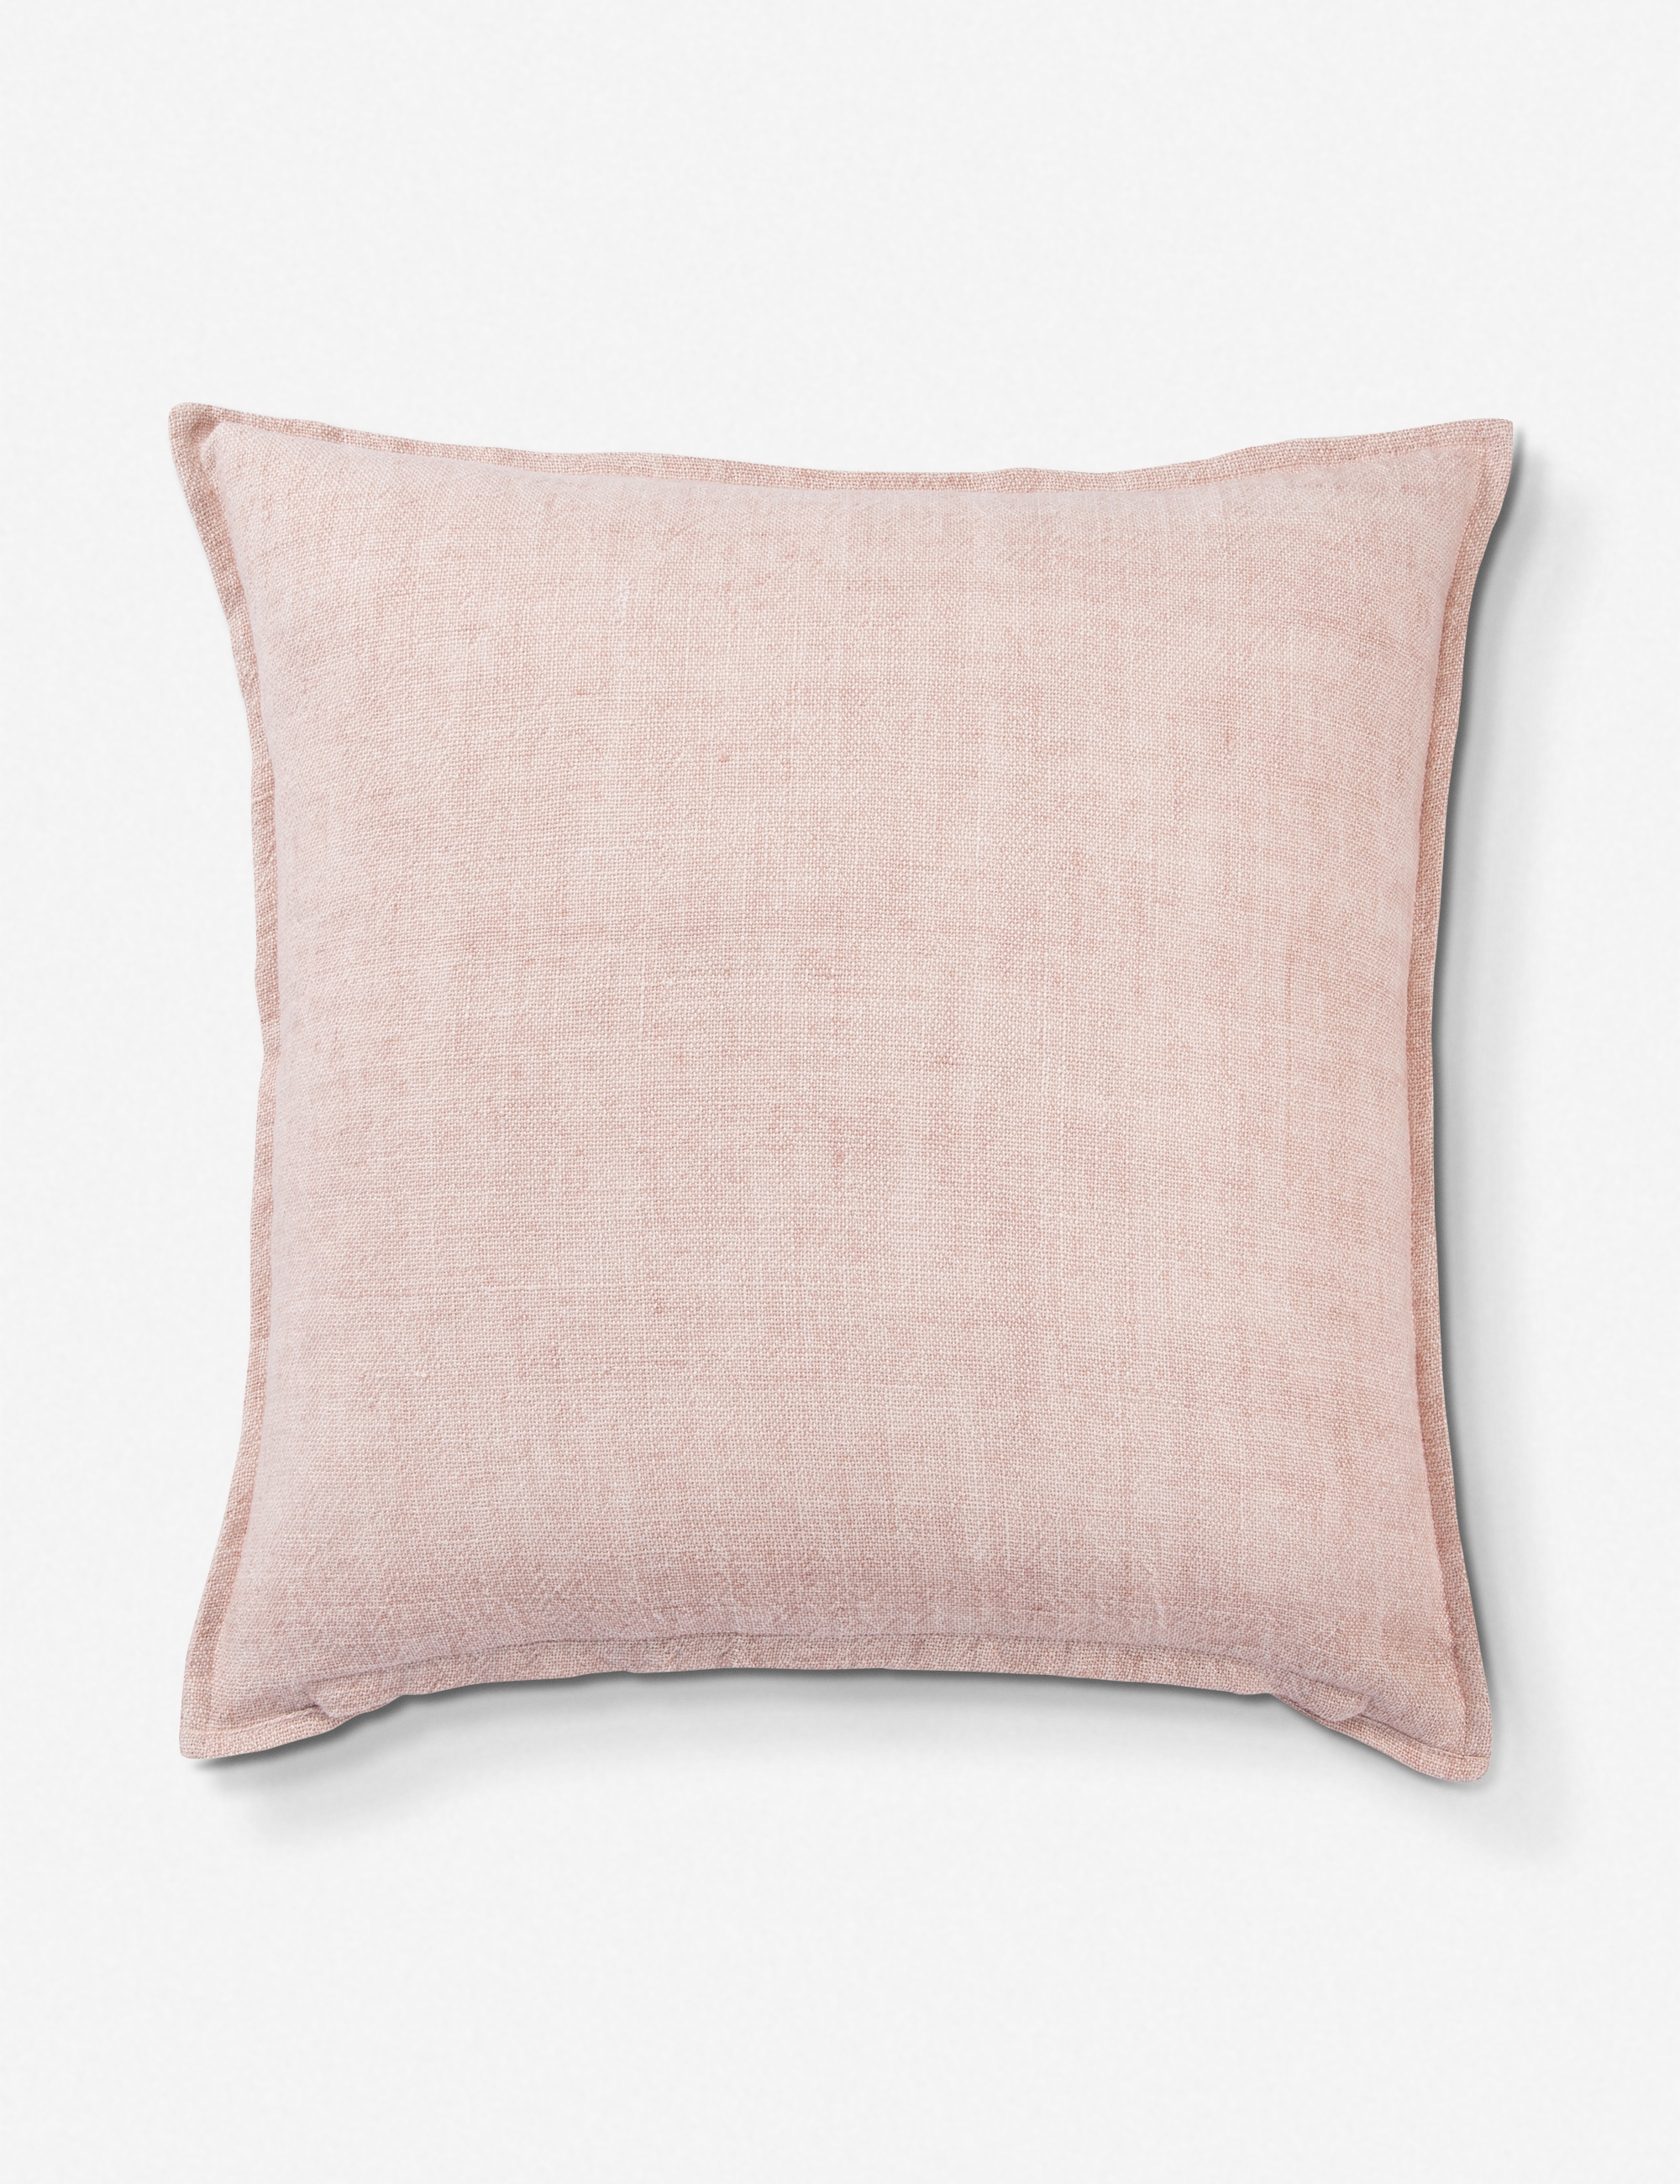 Emalita Linen Pillow, Cameo Rose - Image 2